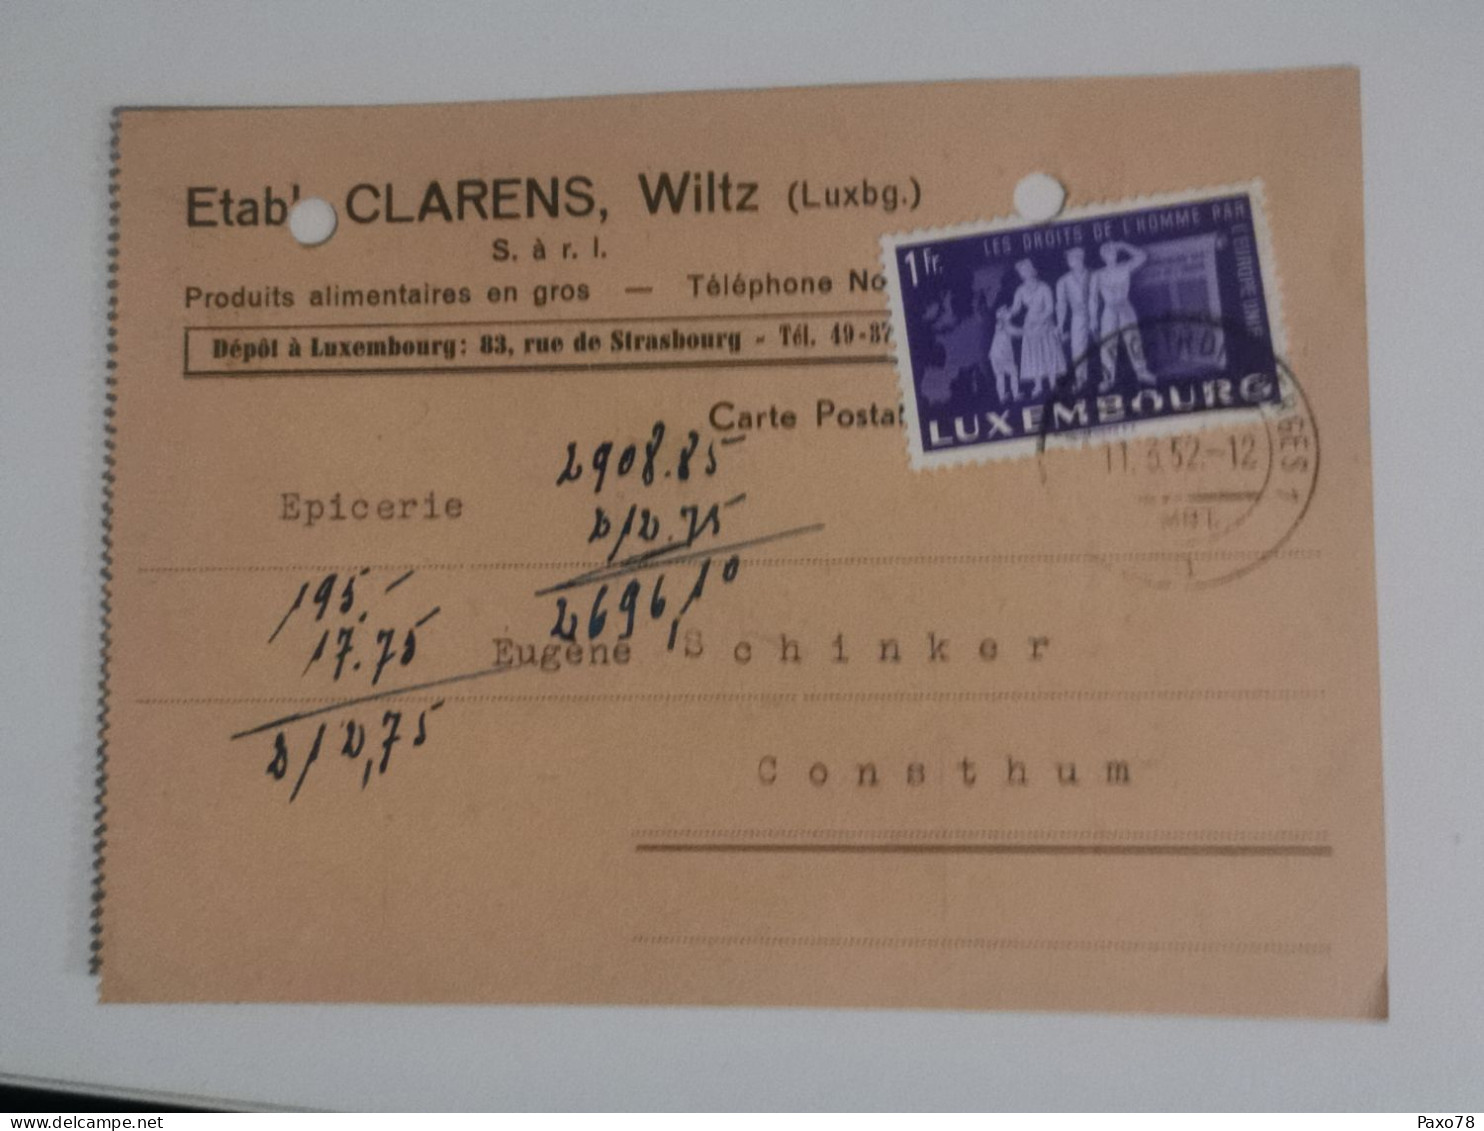 Entier Postaux, Établissements Clarens, Wiltz 1952 - Ganzsachen